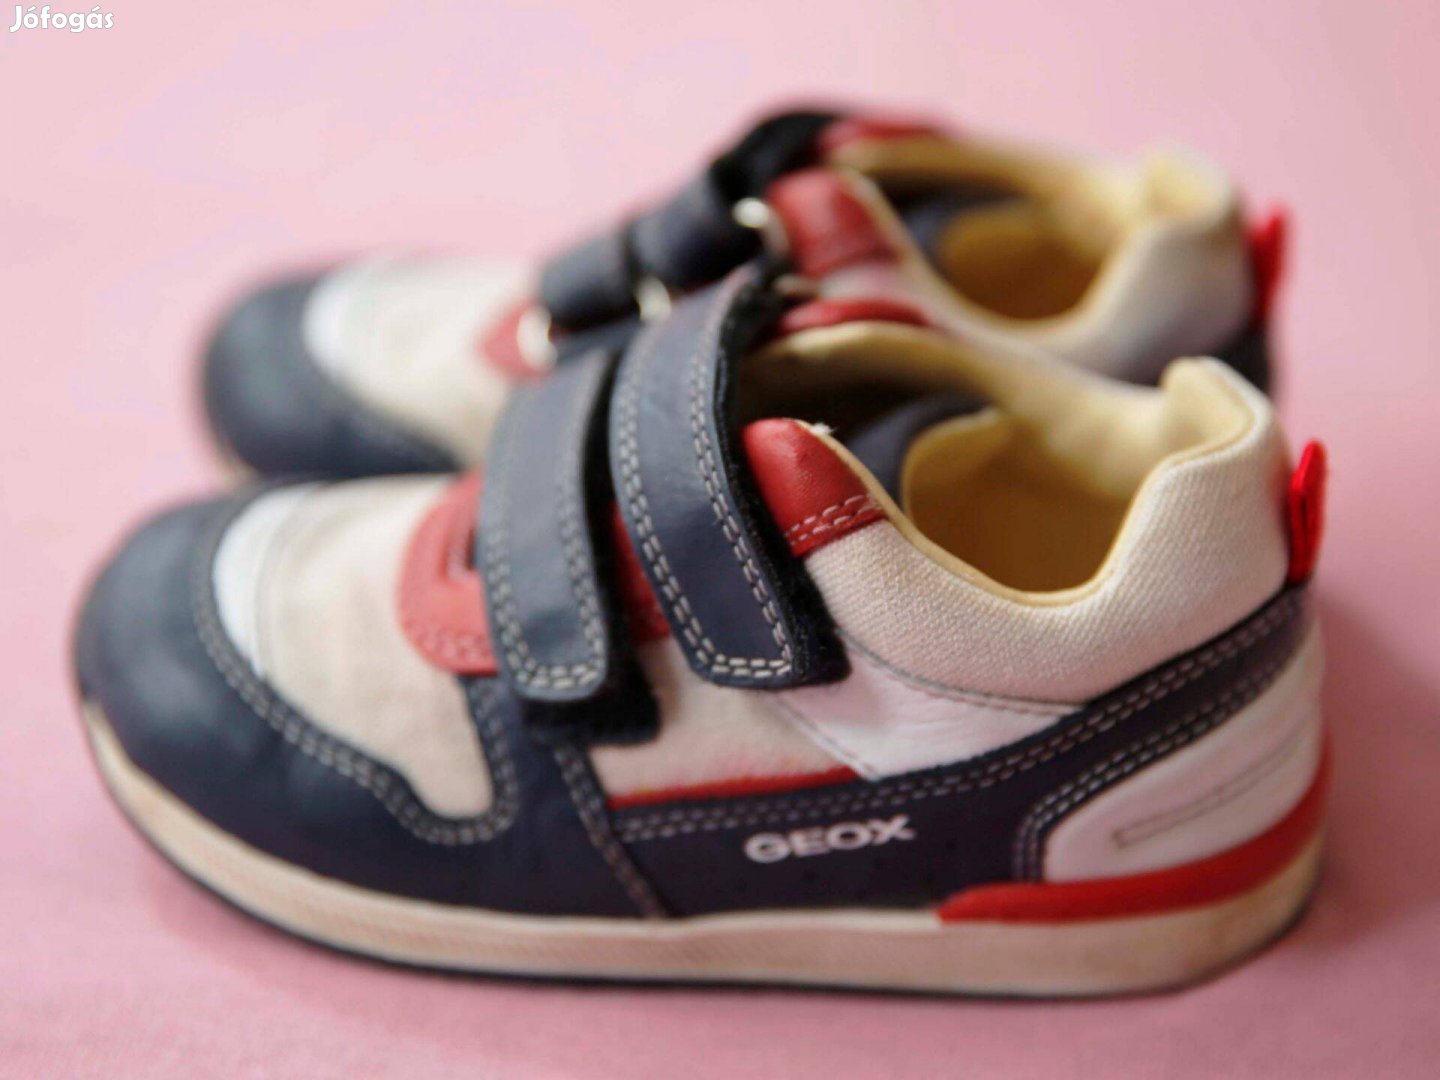 Geox kisfiú cipő 25